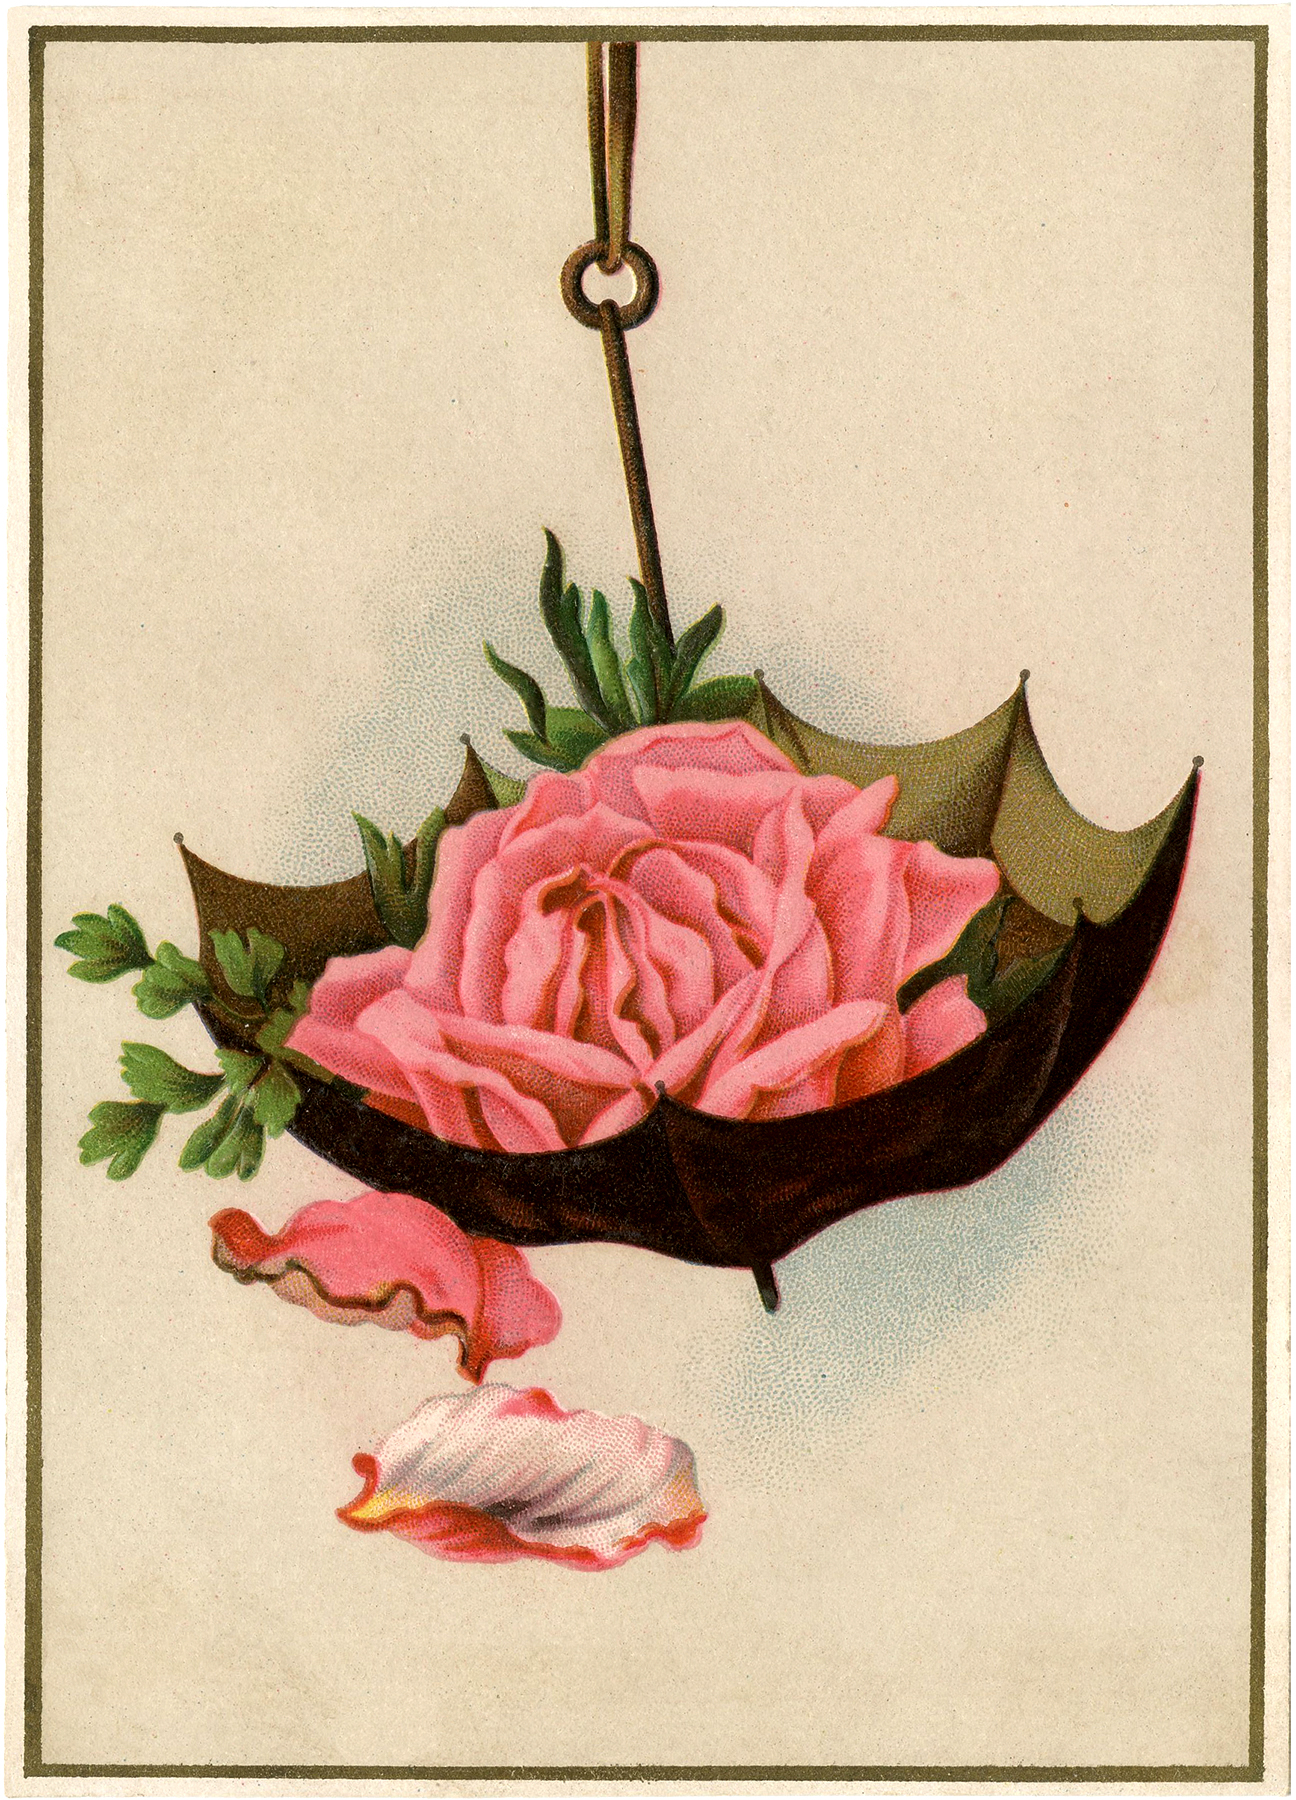 Shabby Pink Rose Umbrella Image! - The Graphics Fairy